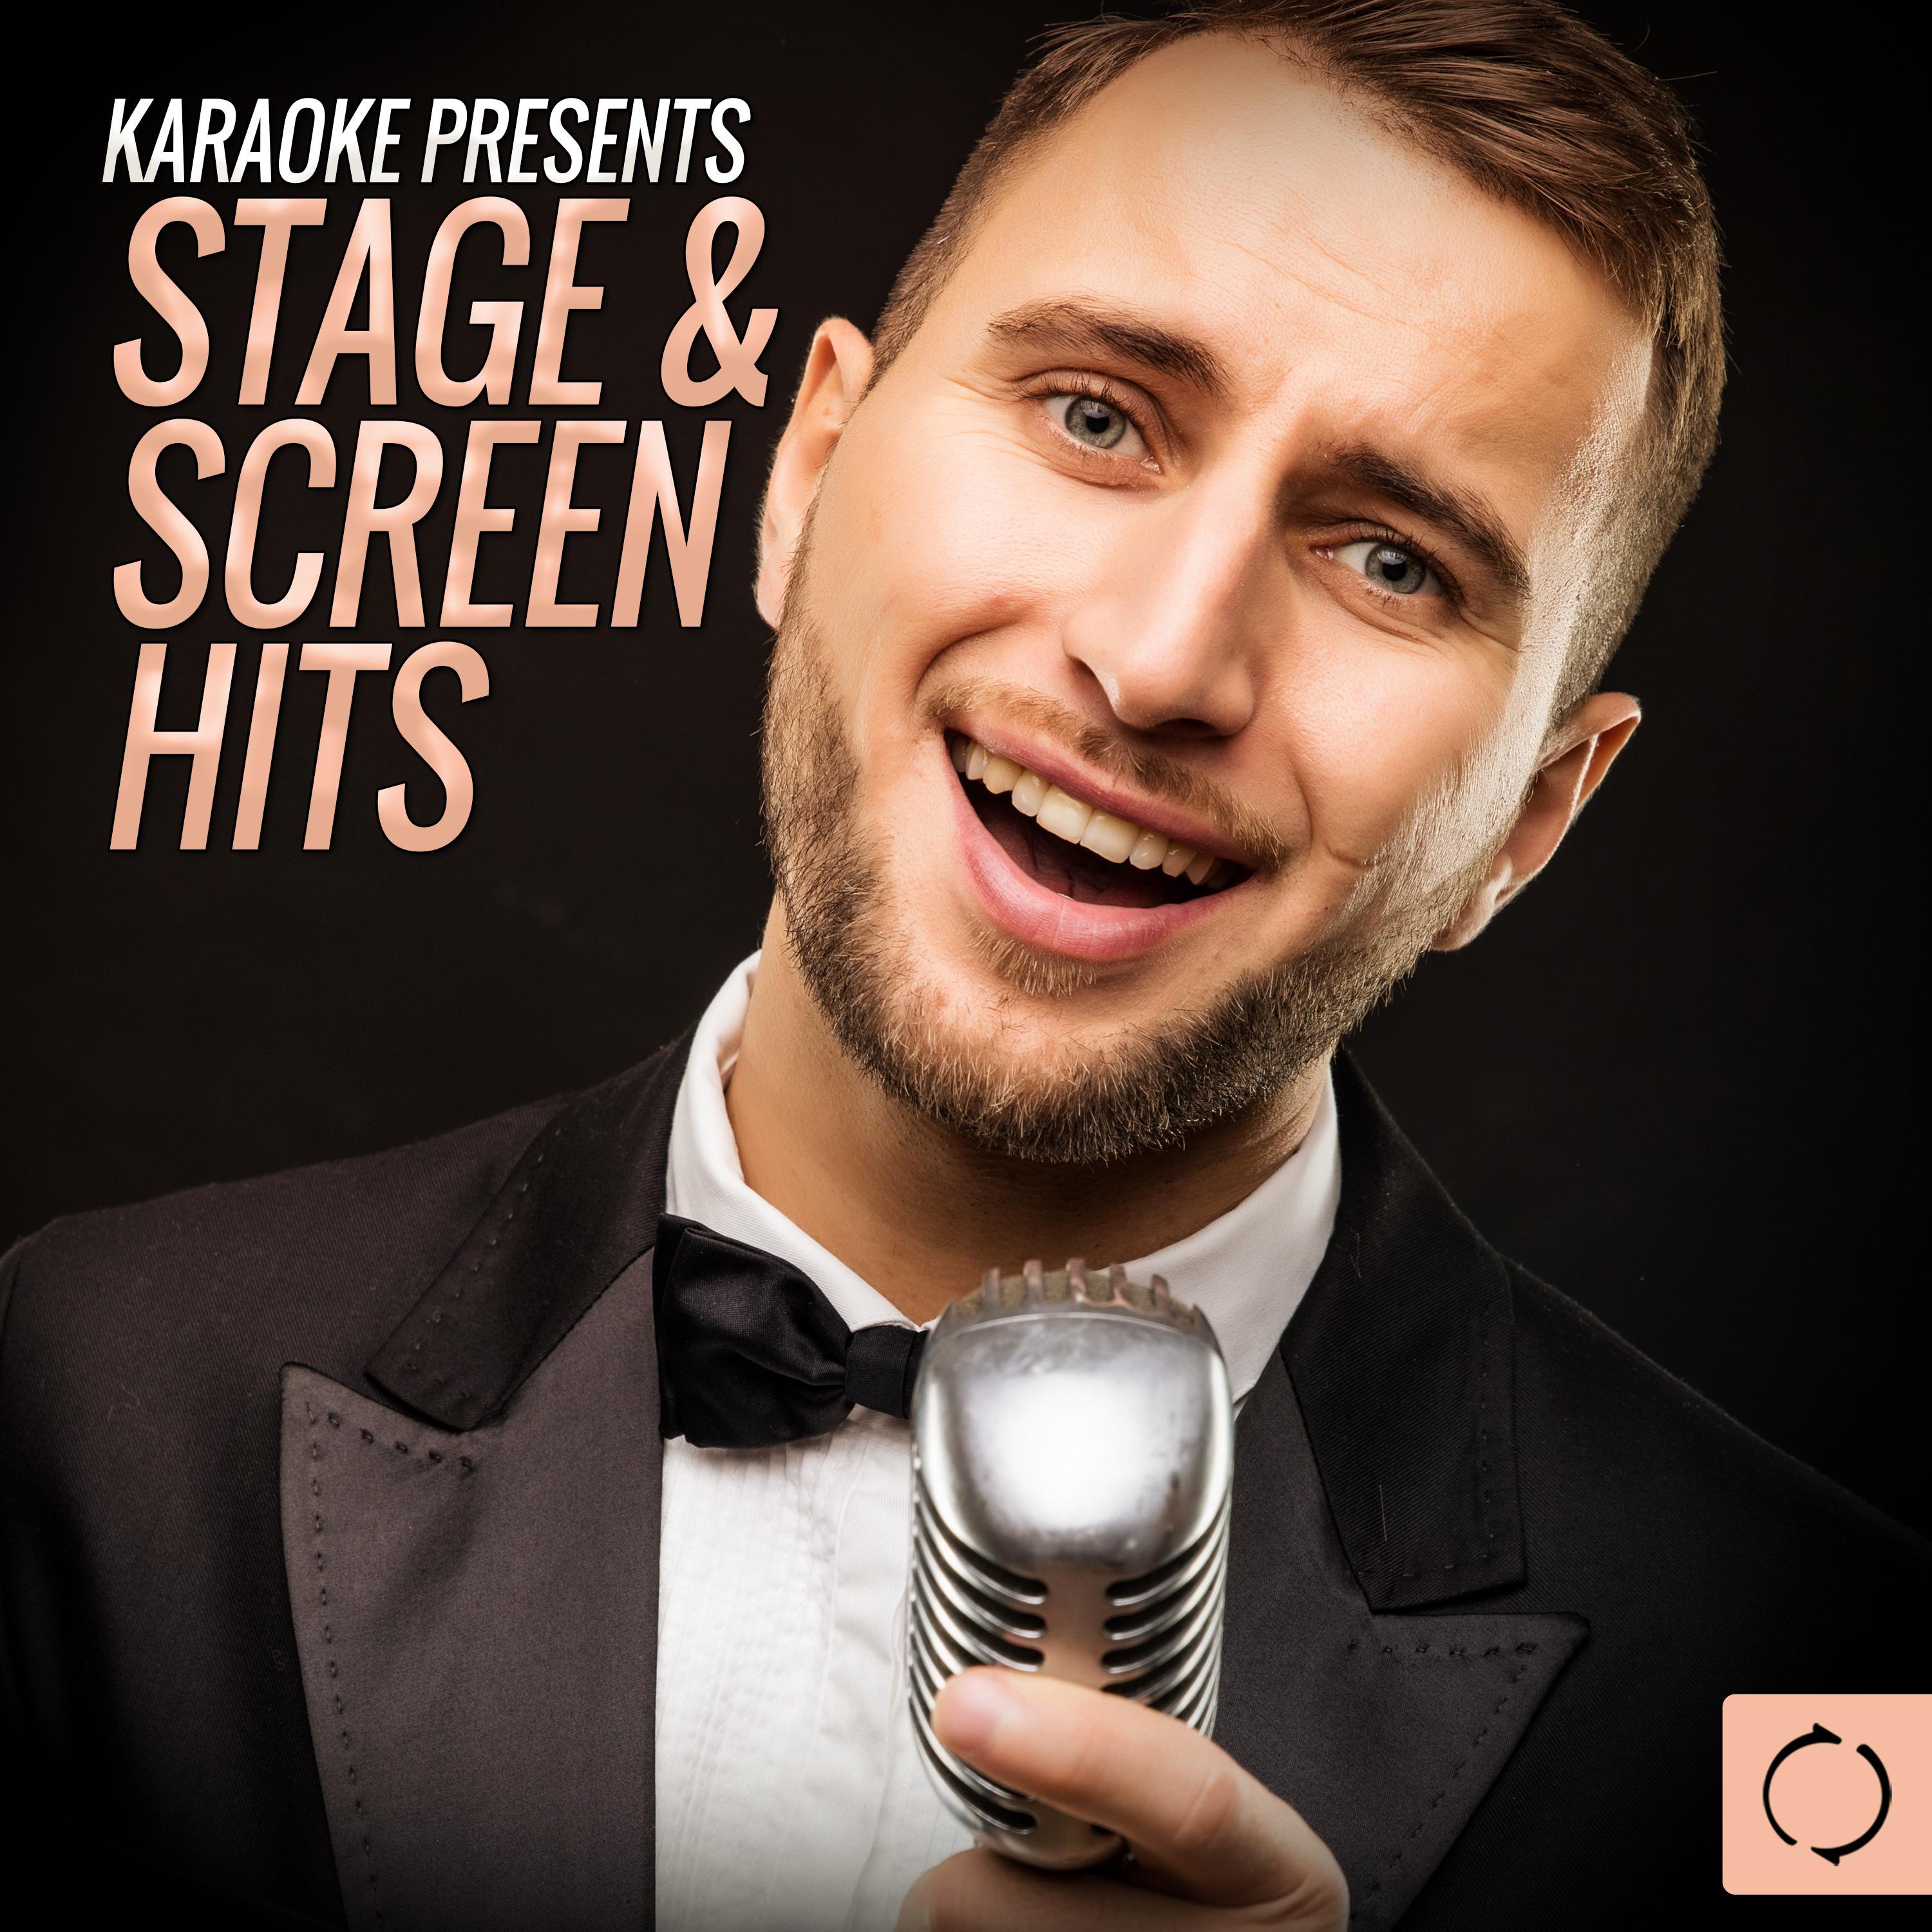 Karaoke Presents: Stage & Screen Hits